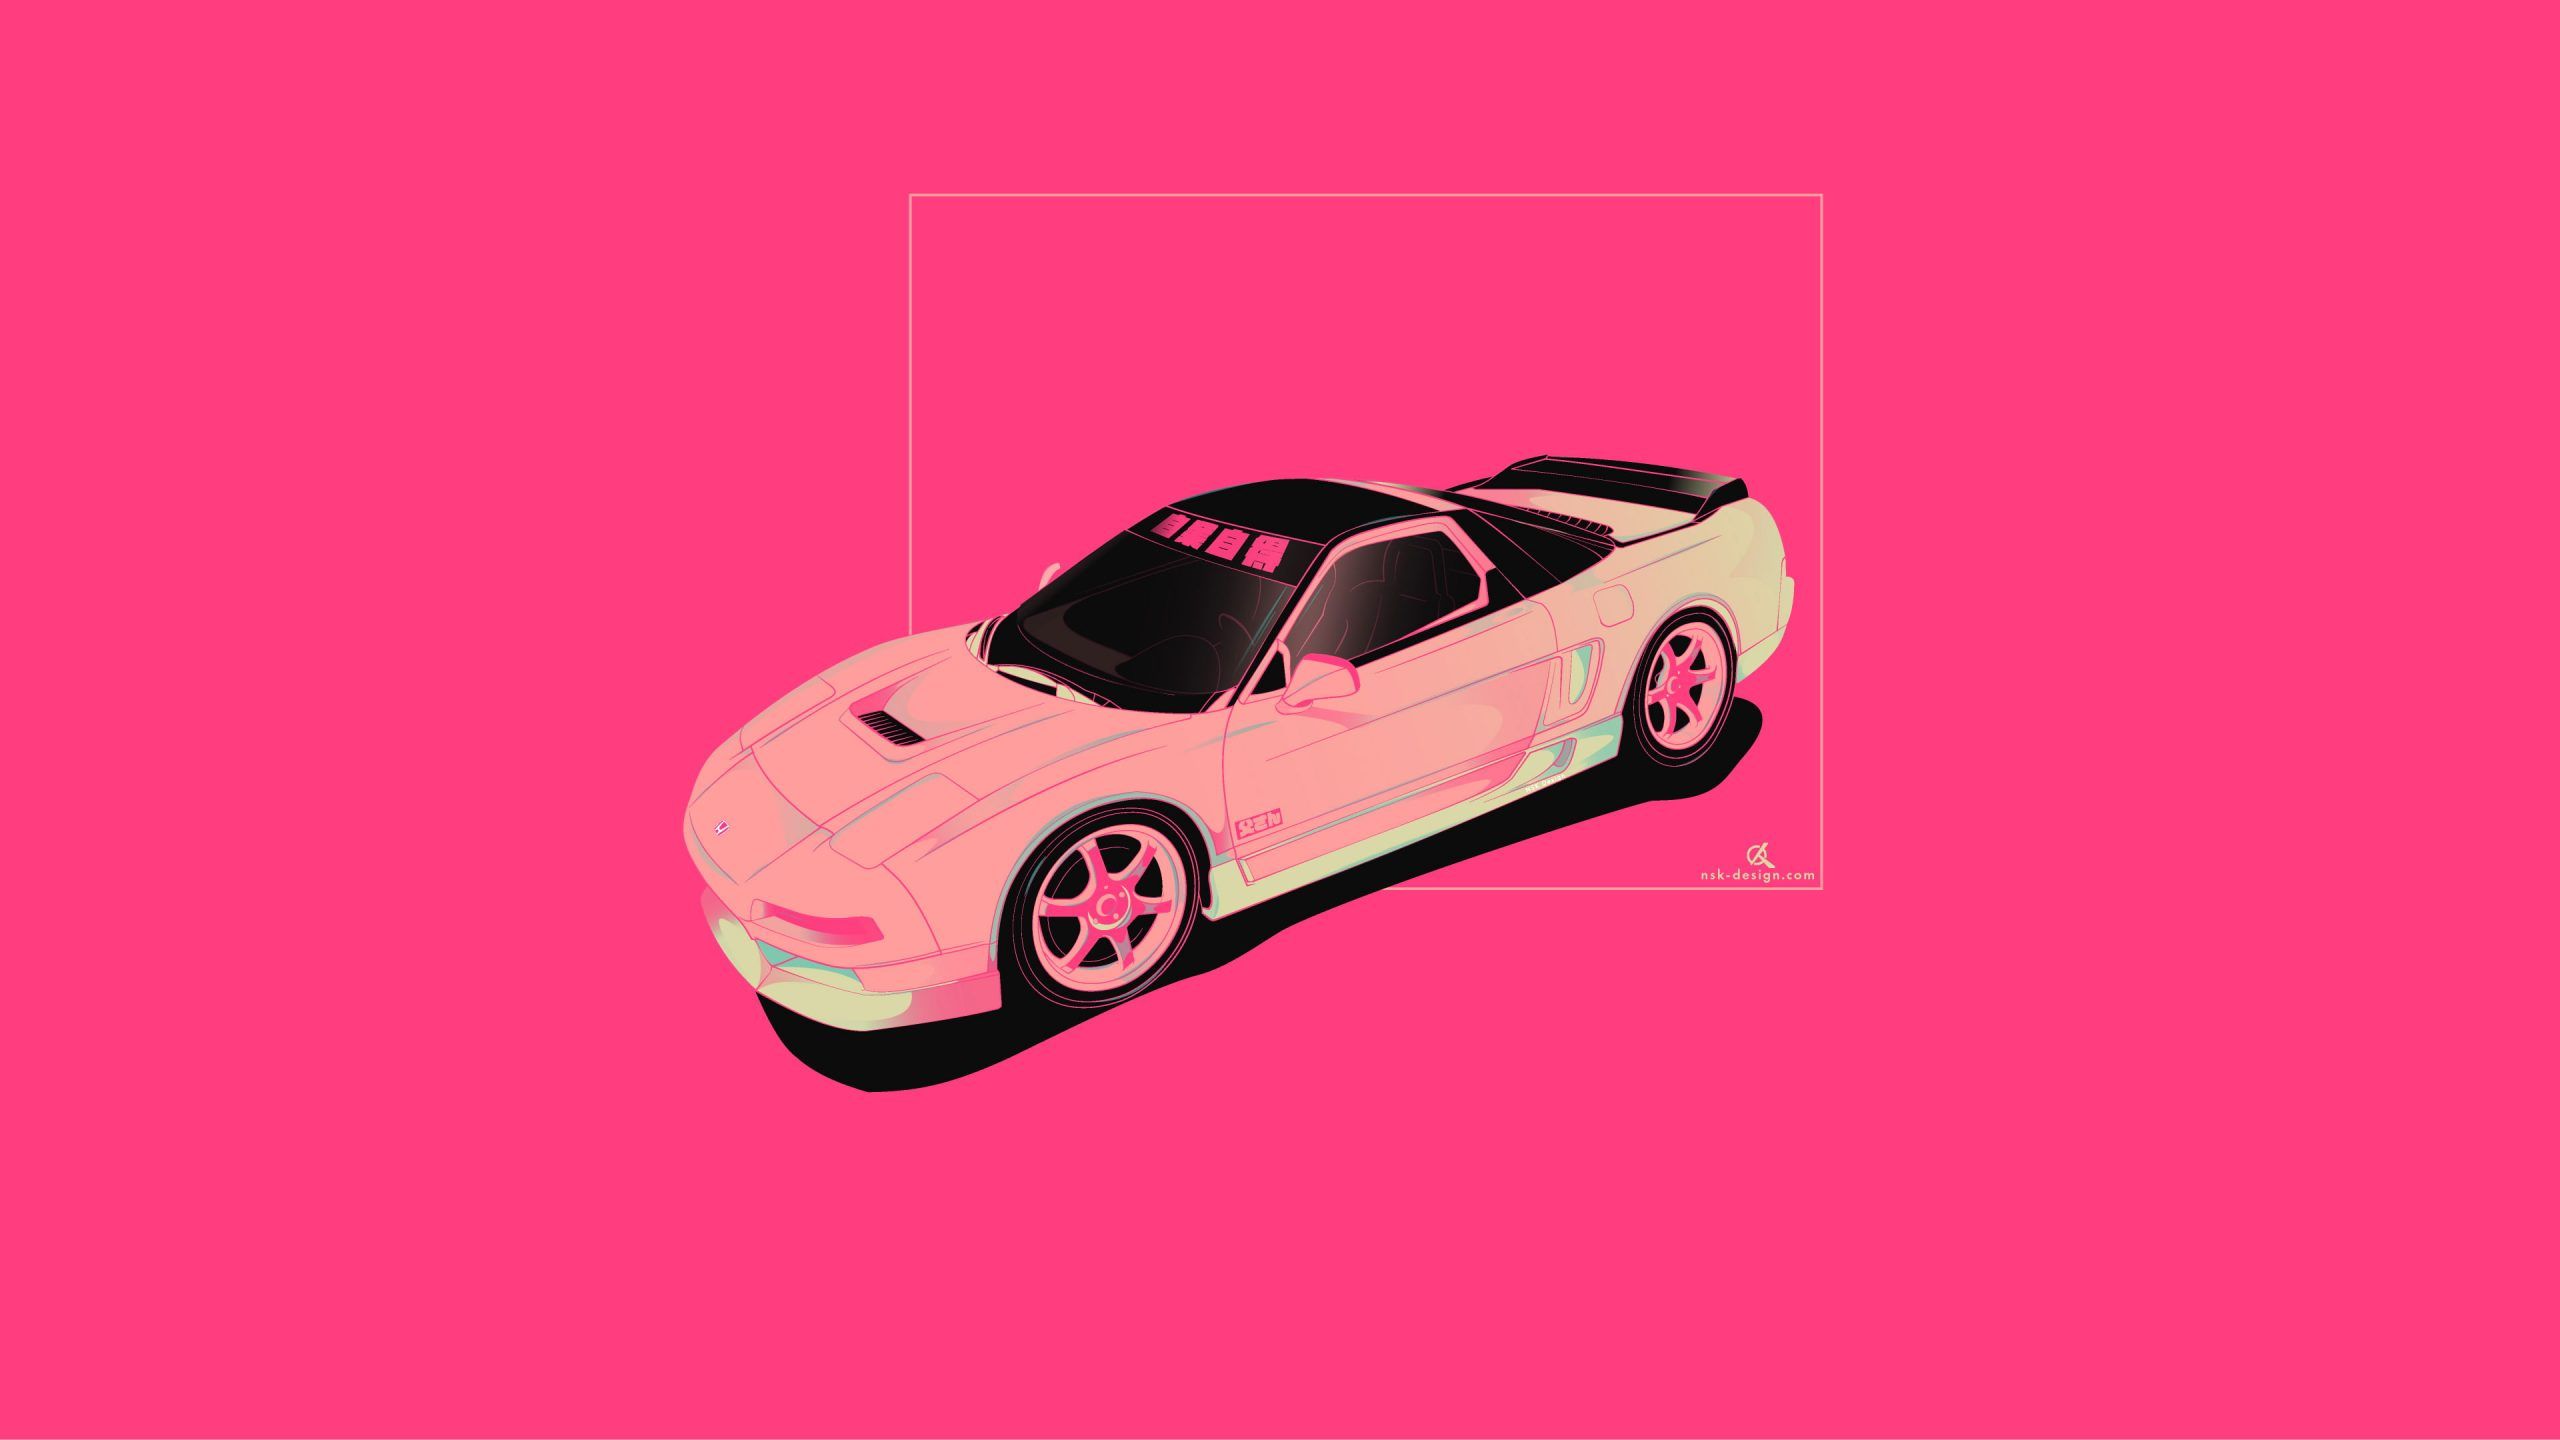 A digital illustration of a pink car on a pink background - JDM